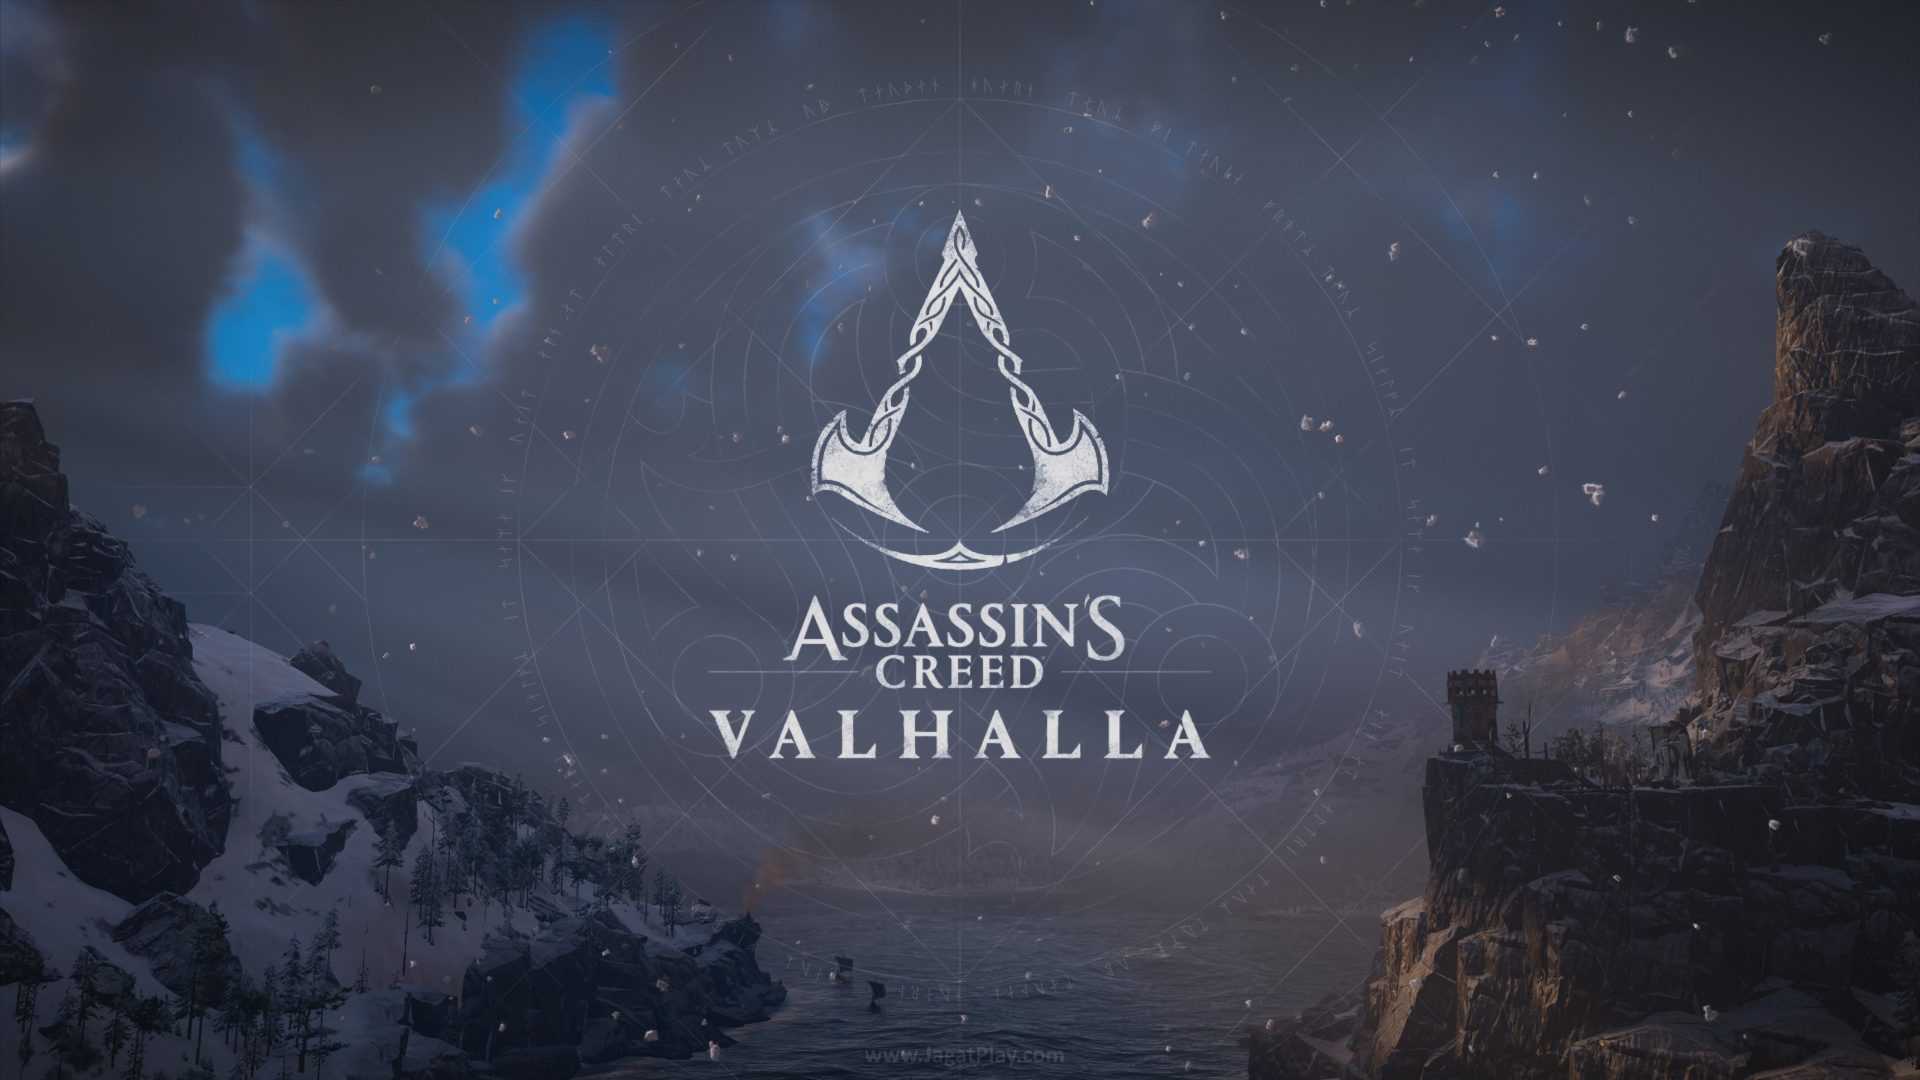 Assassin's creed valhalla: прохождение йотунхейма